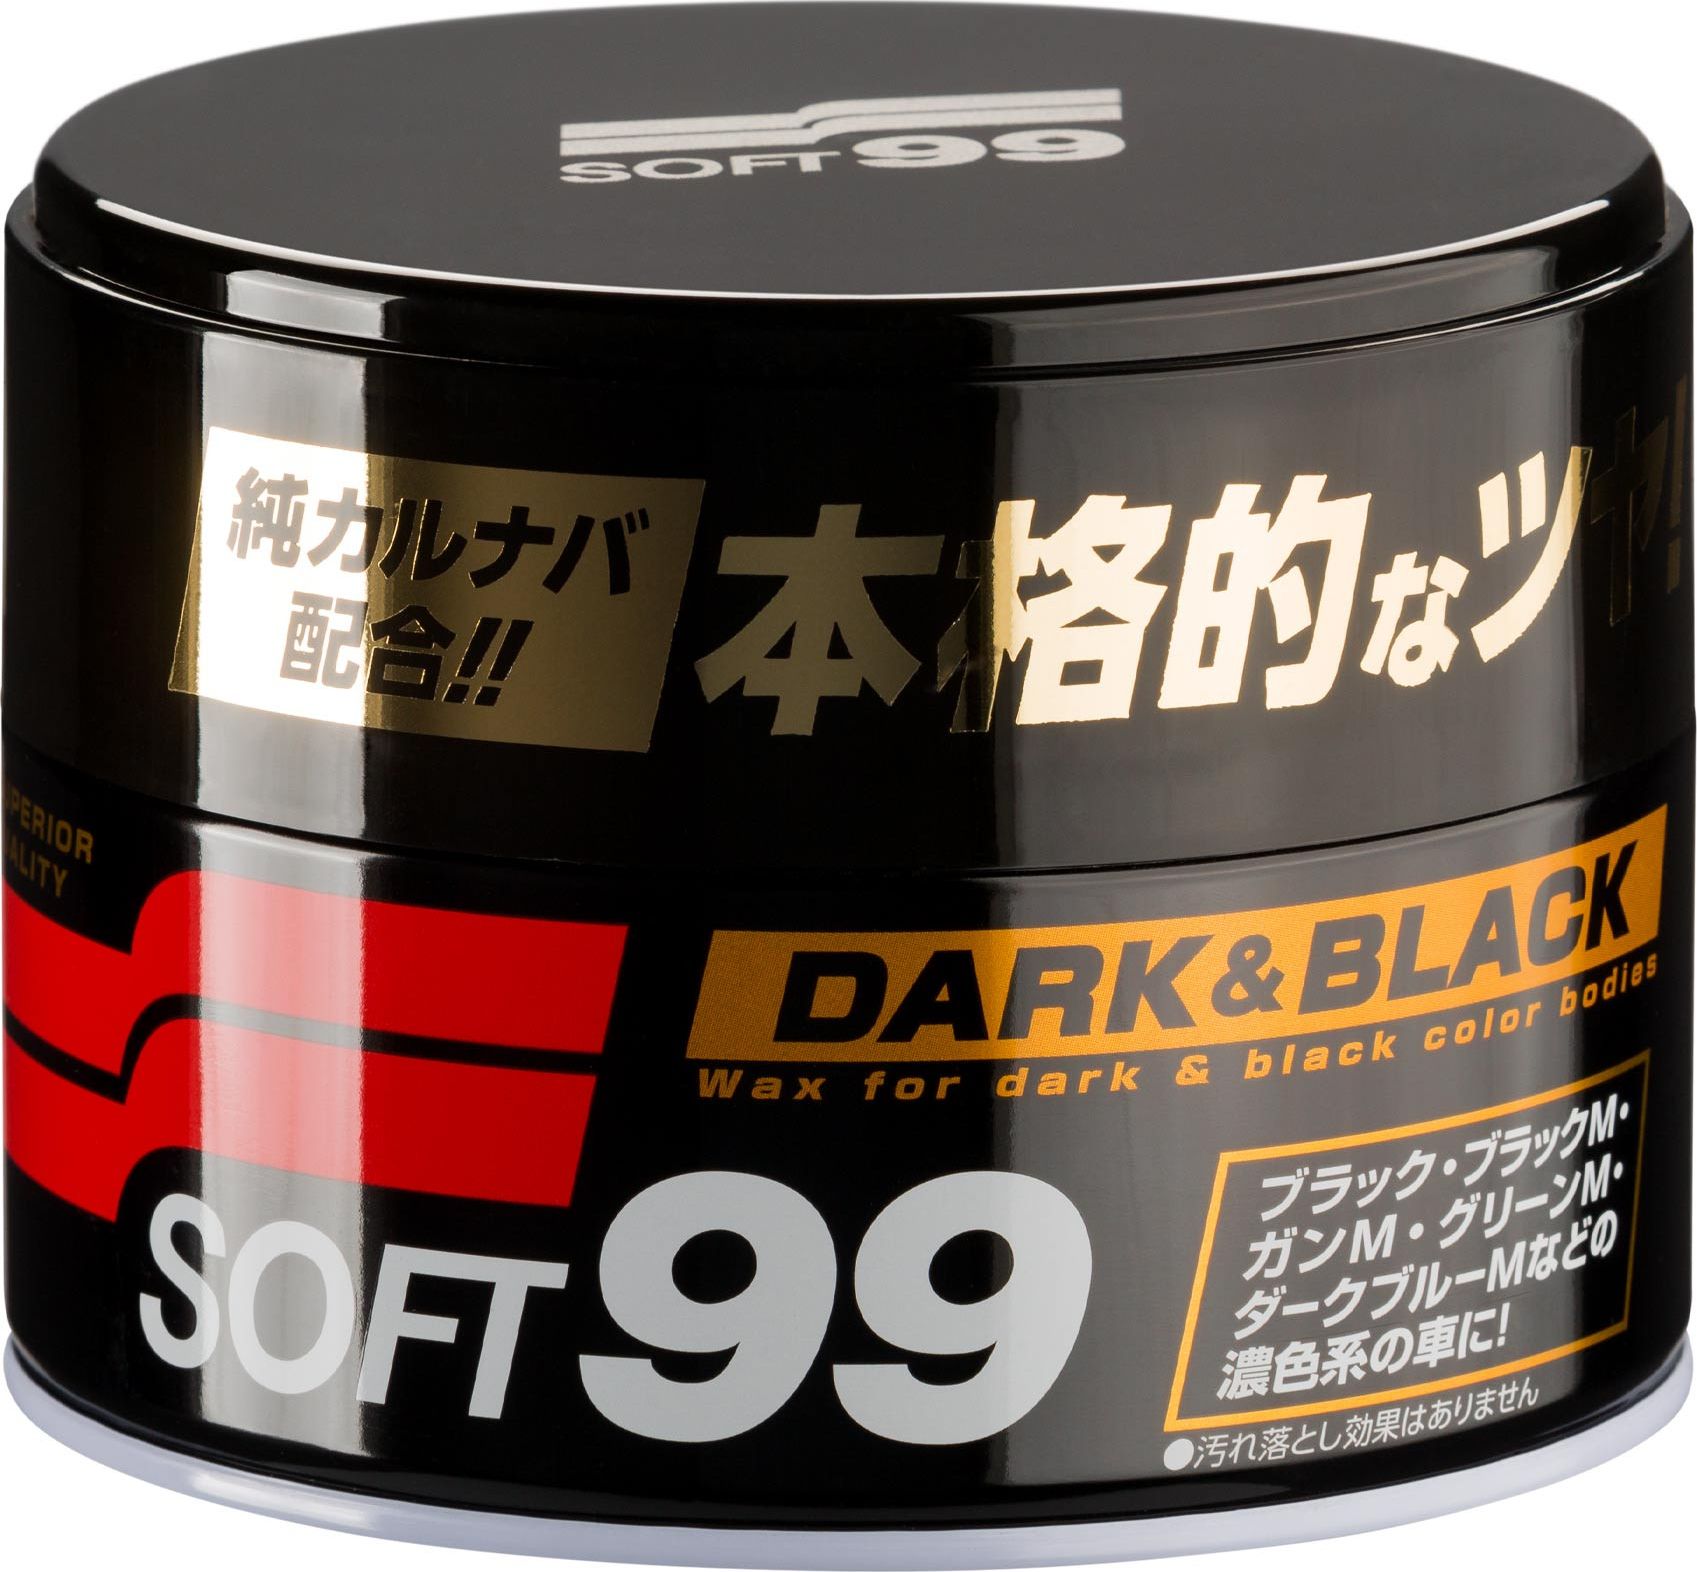 Soft99 Dark & Black Soft99 Wax, ceară tare auto, 300 g